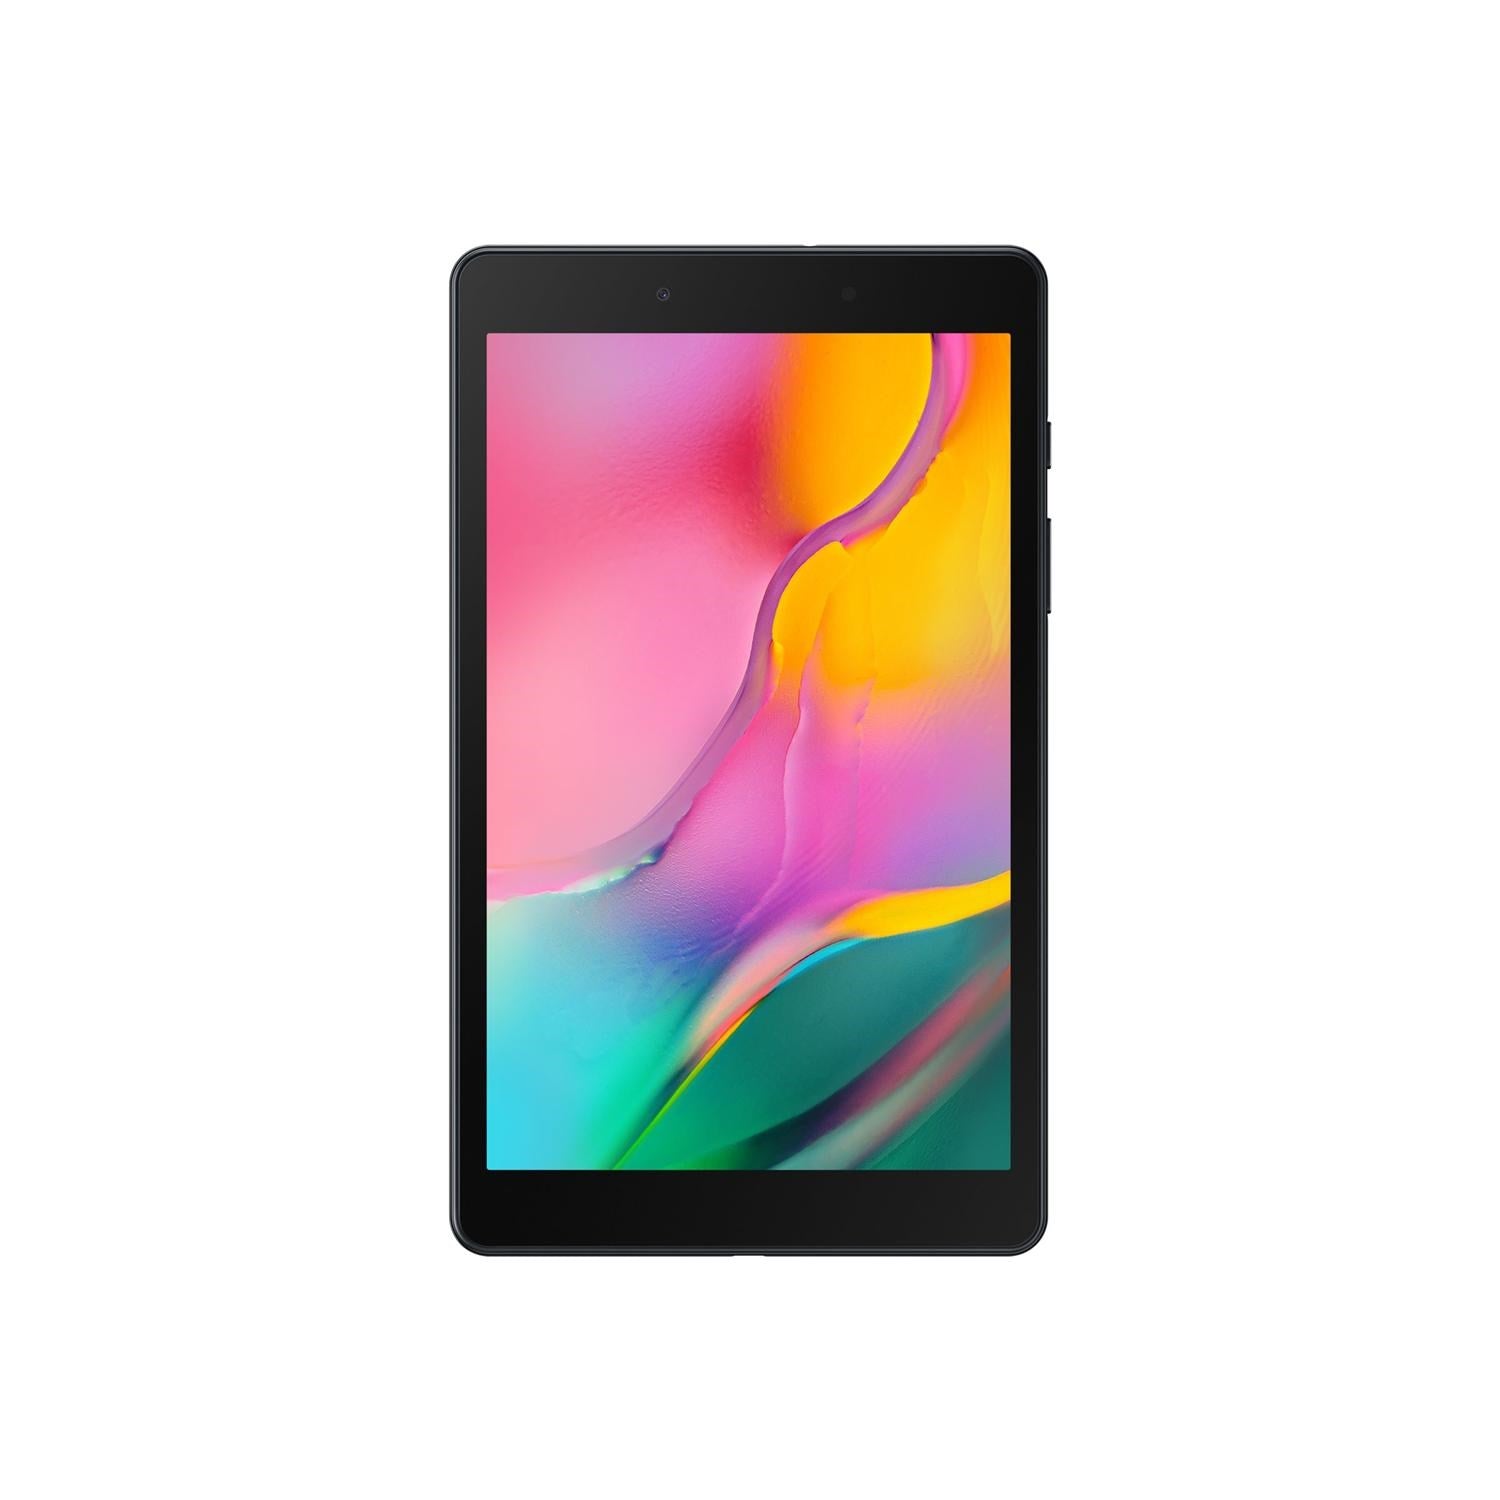 Samsung Galaxy Tablet A 8 - New fonezworldarklow